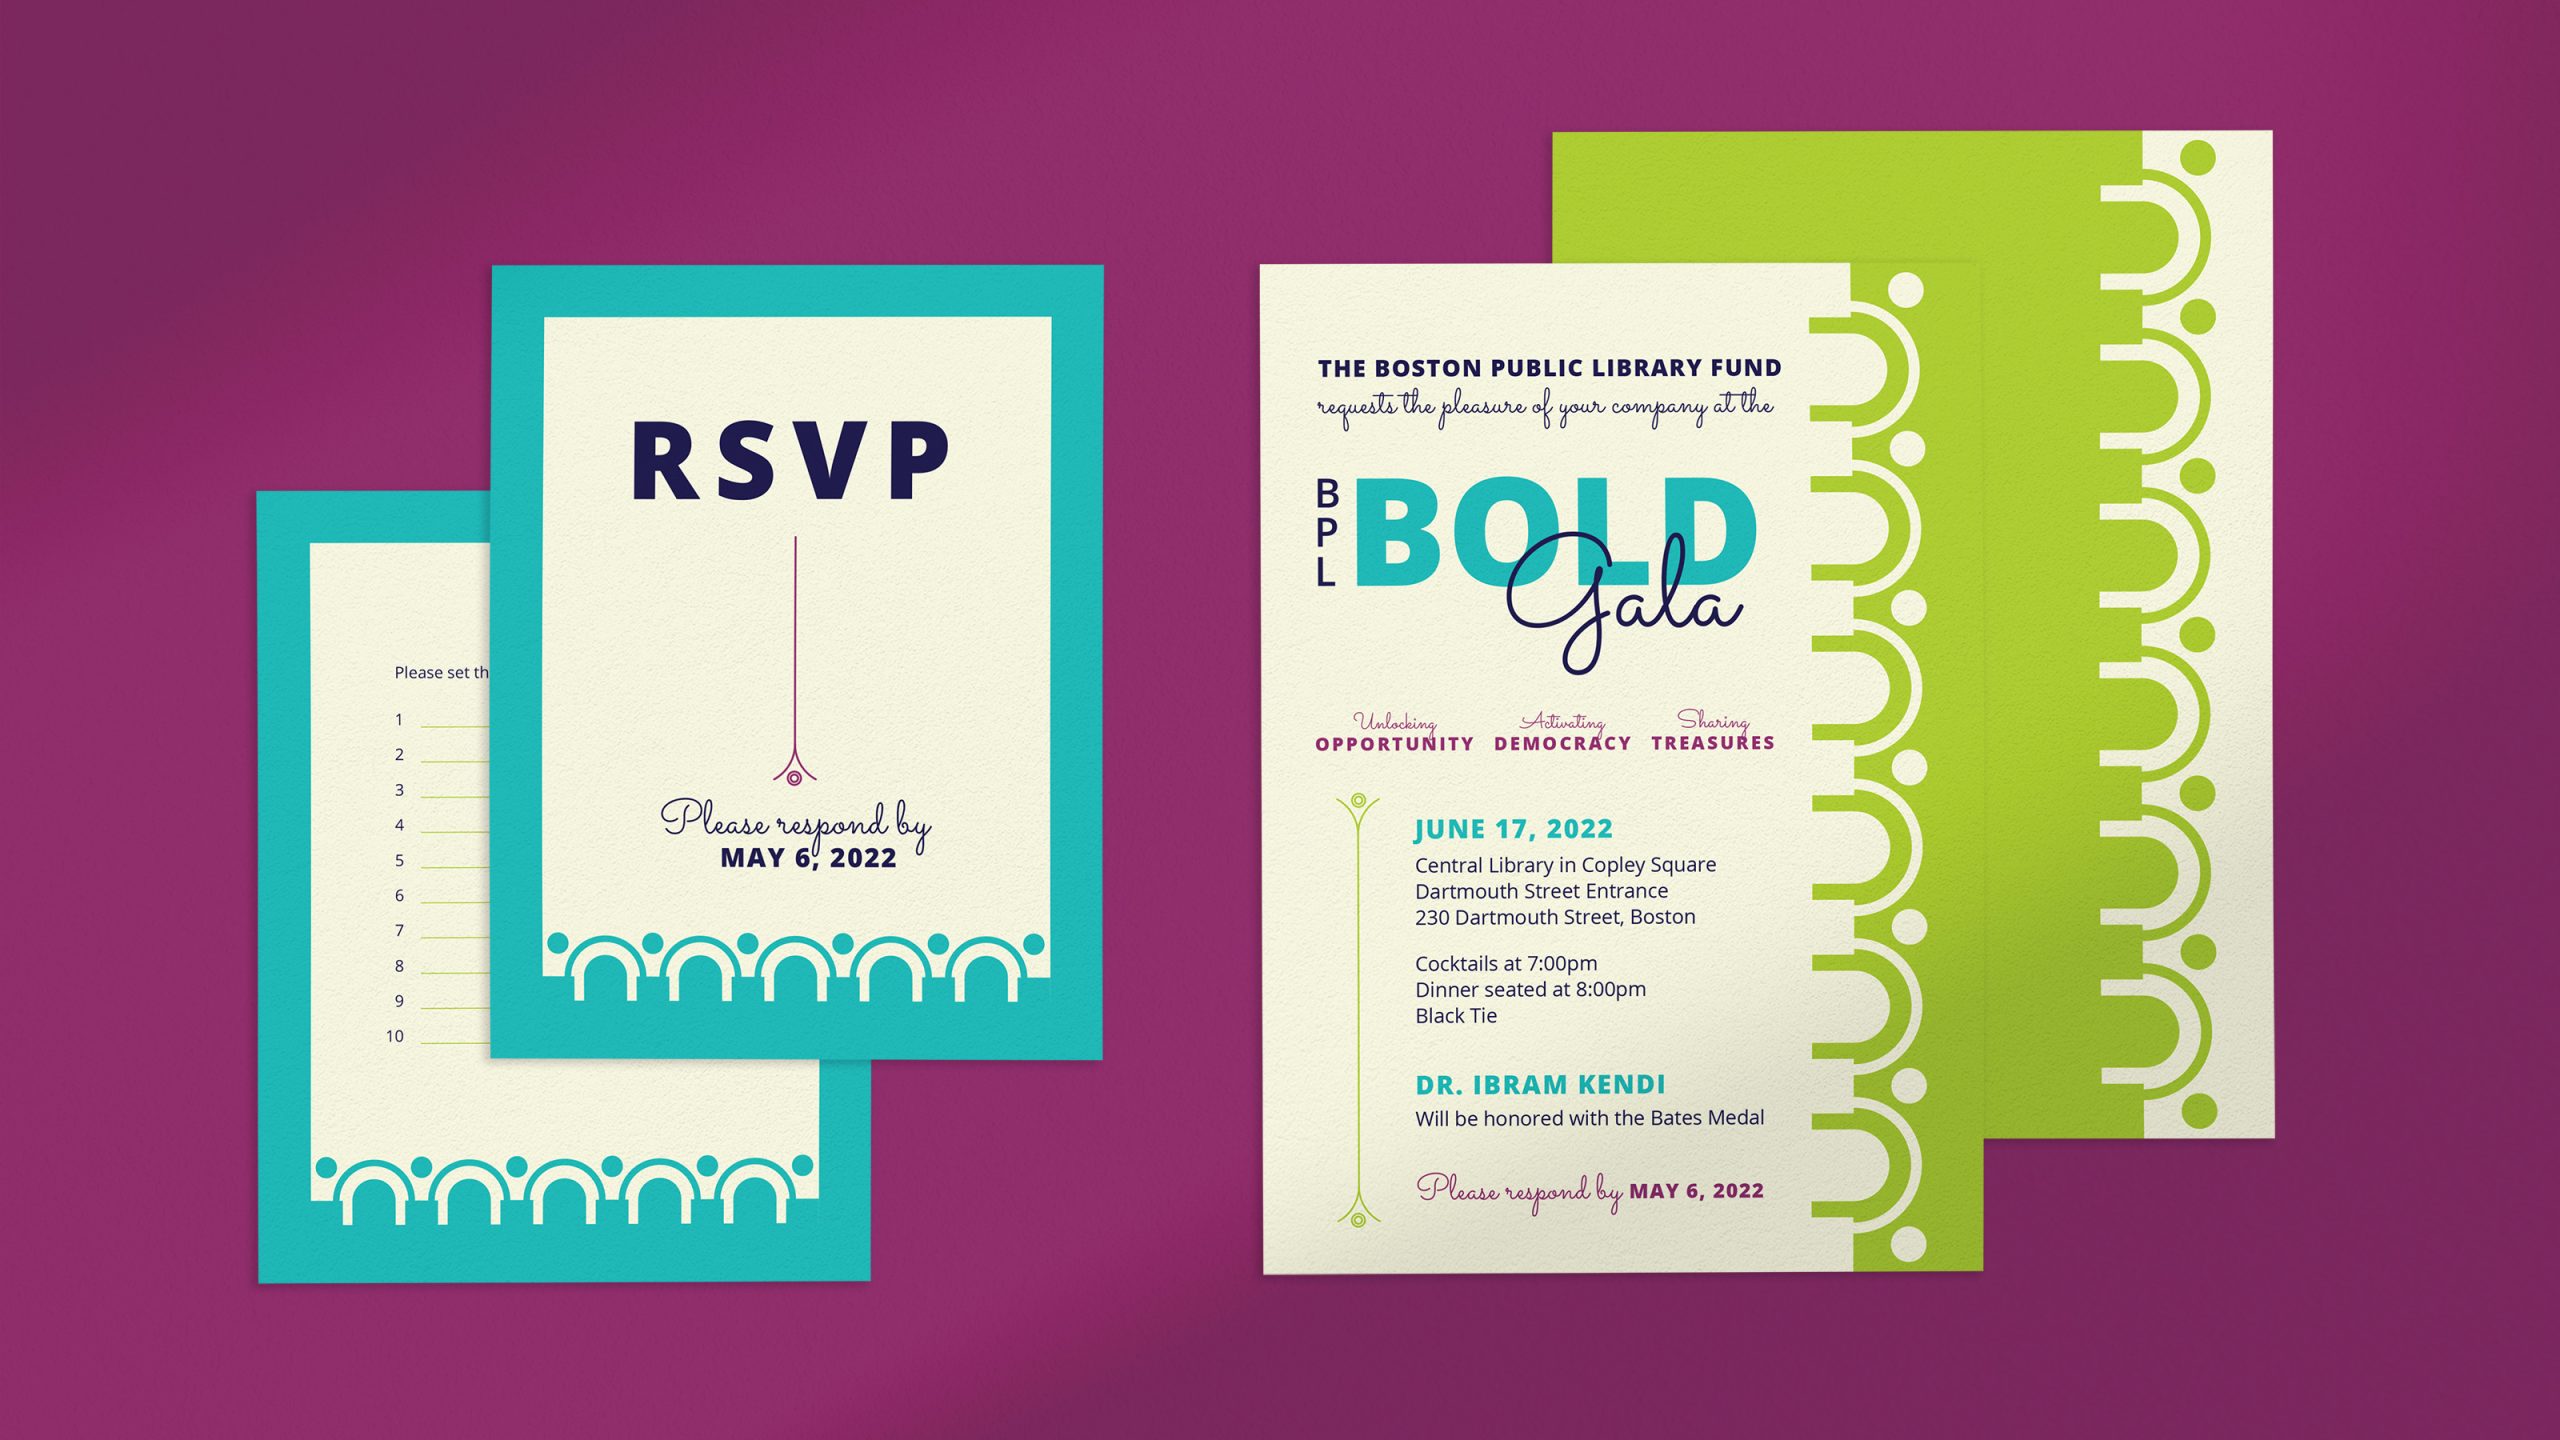 BPL Bold Gala Invitation Design